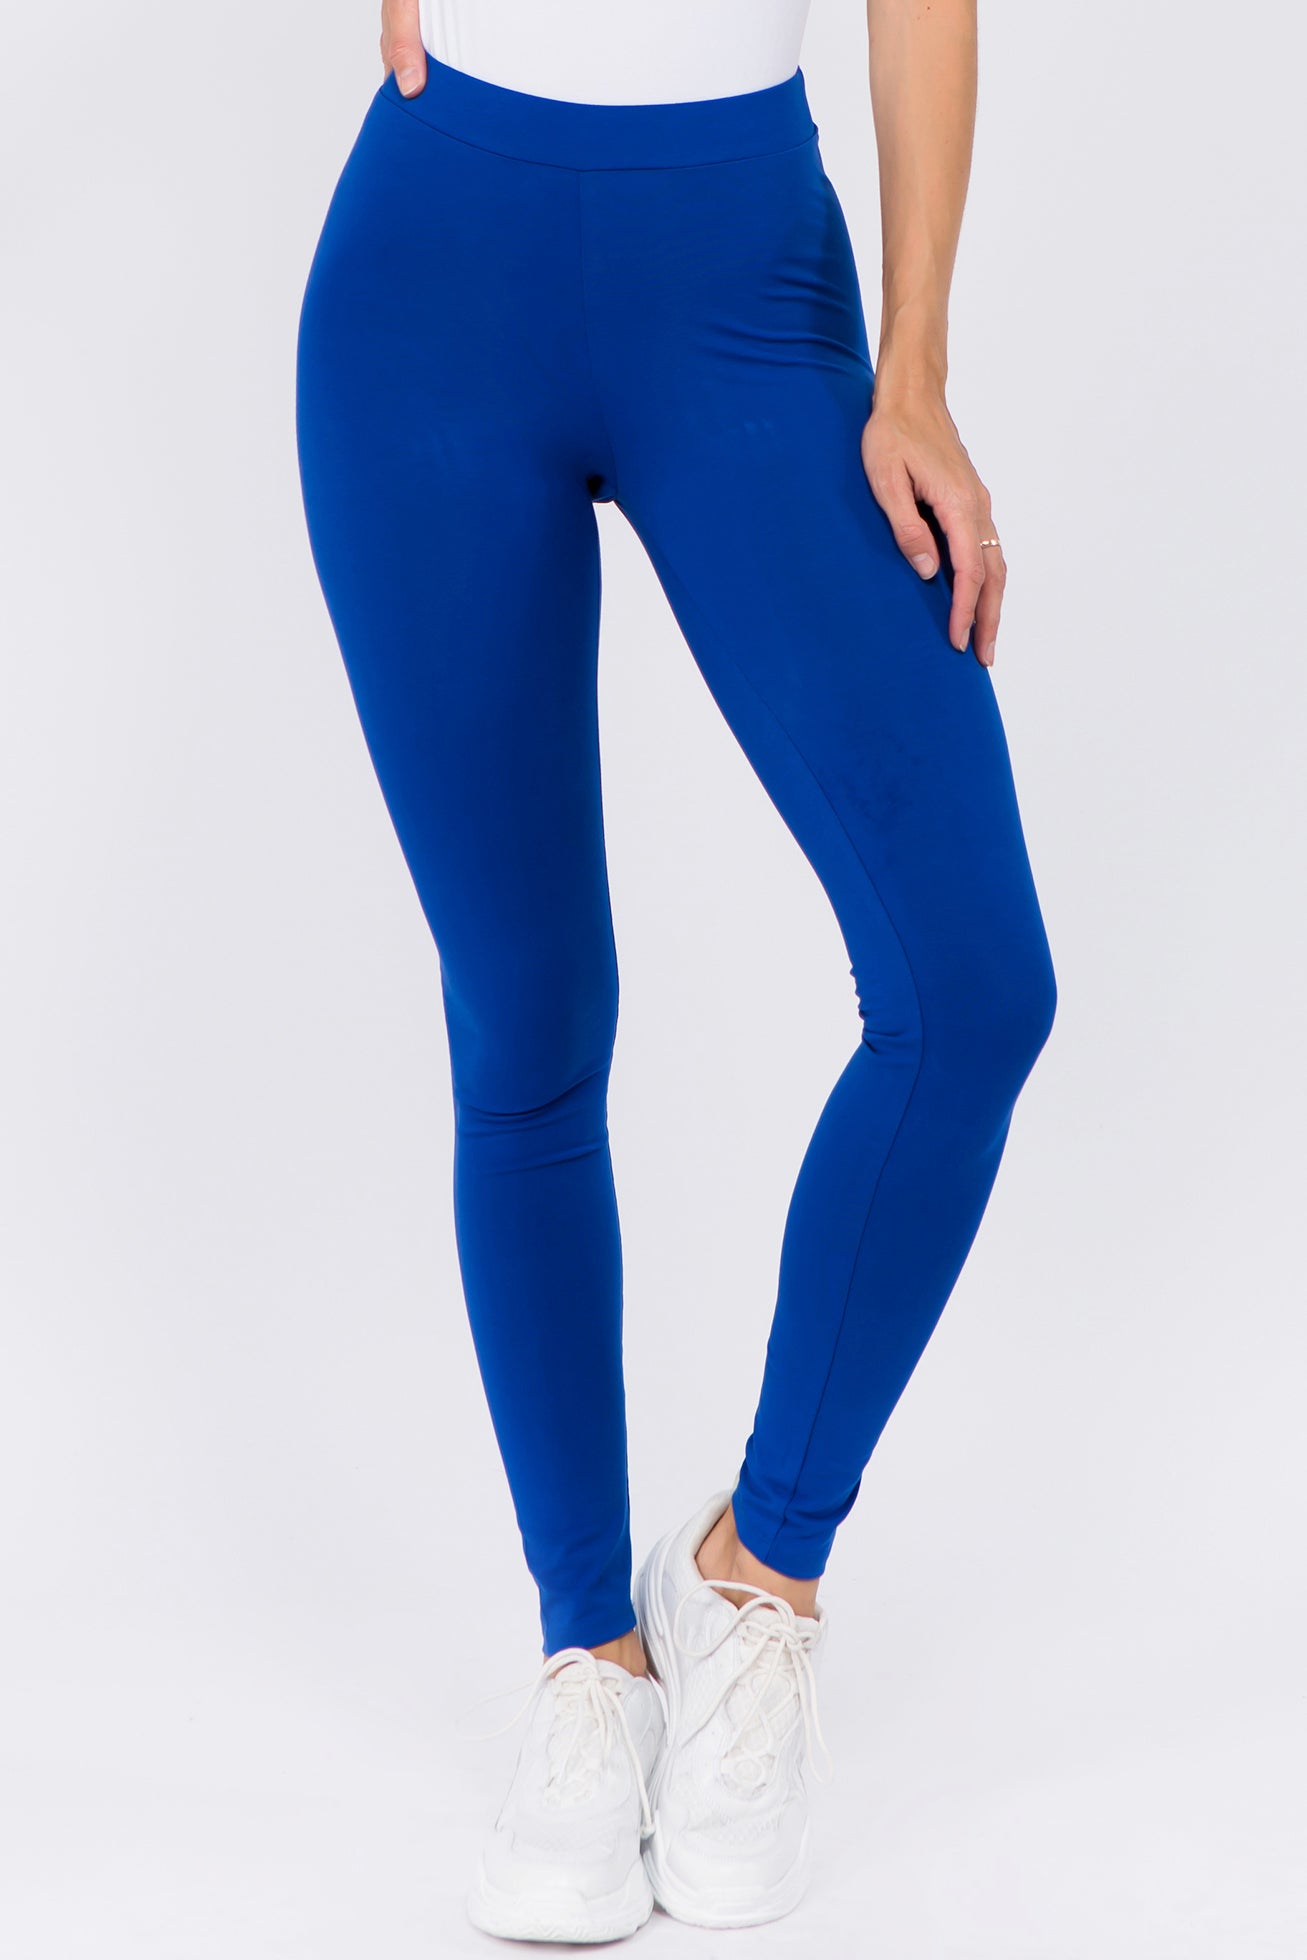 Royal Blue Solid Regular Women's Sports Leggings - Walmart.com